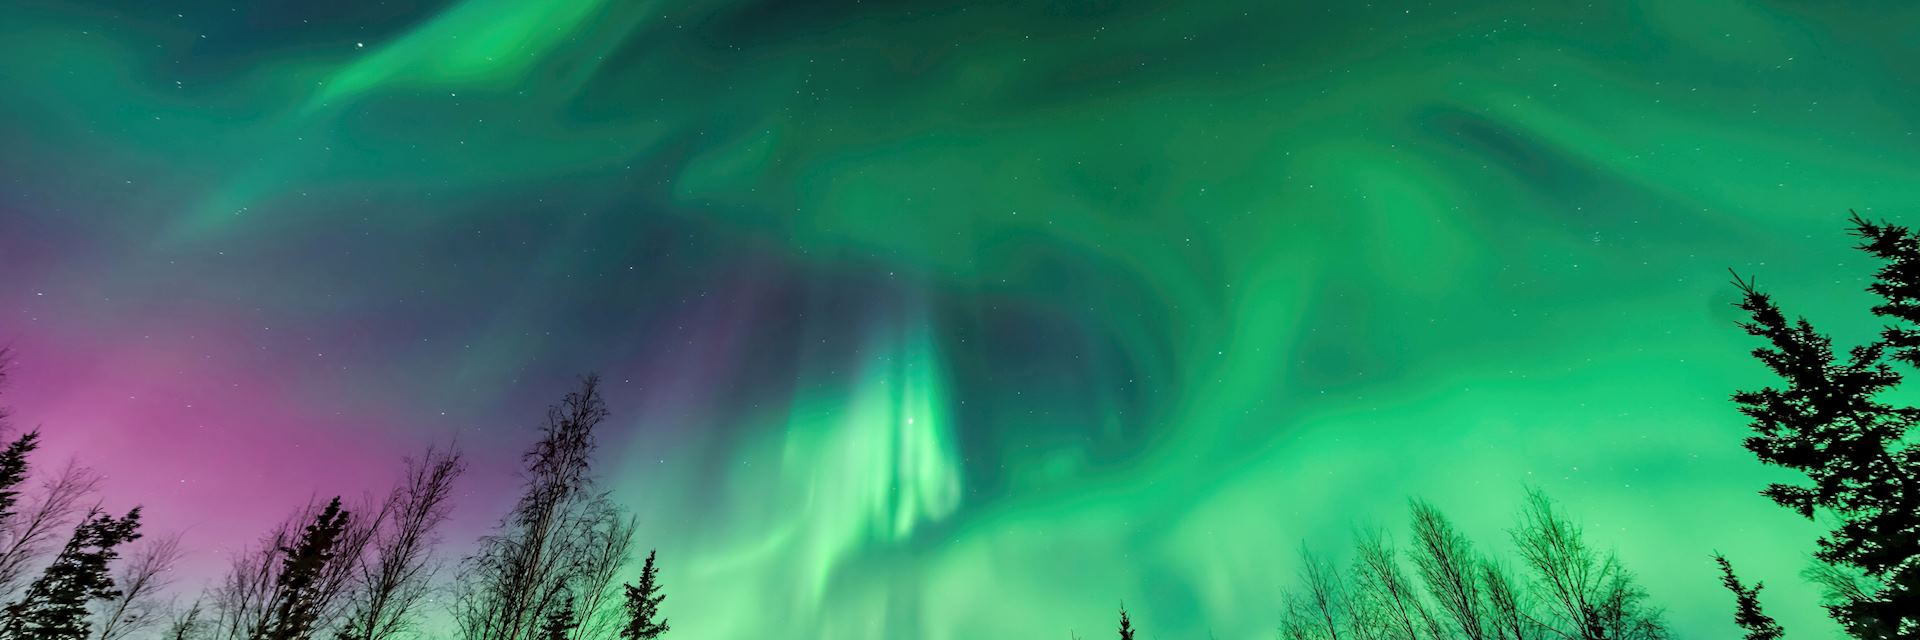 Northern lights over Fairbanks